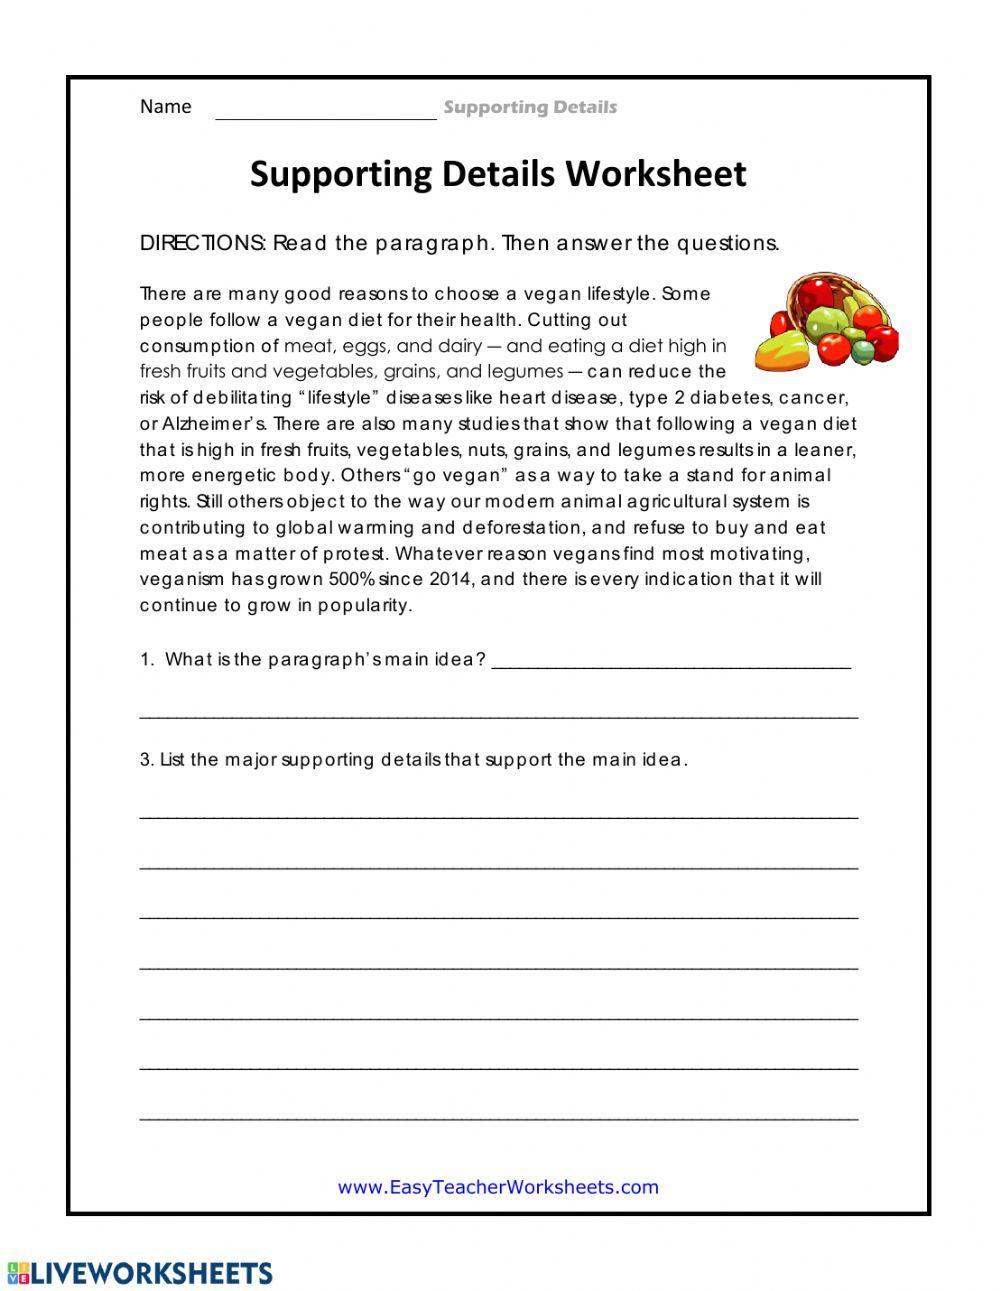 Supporting Details Worksheet